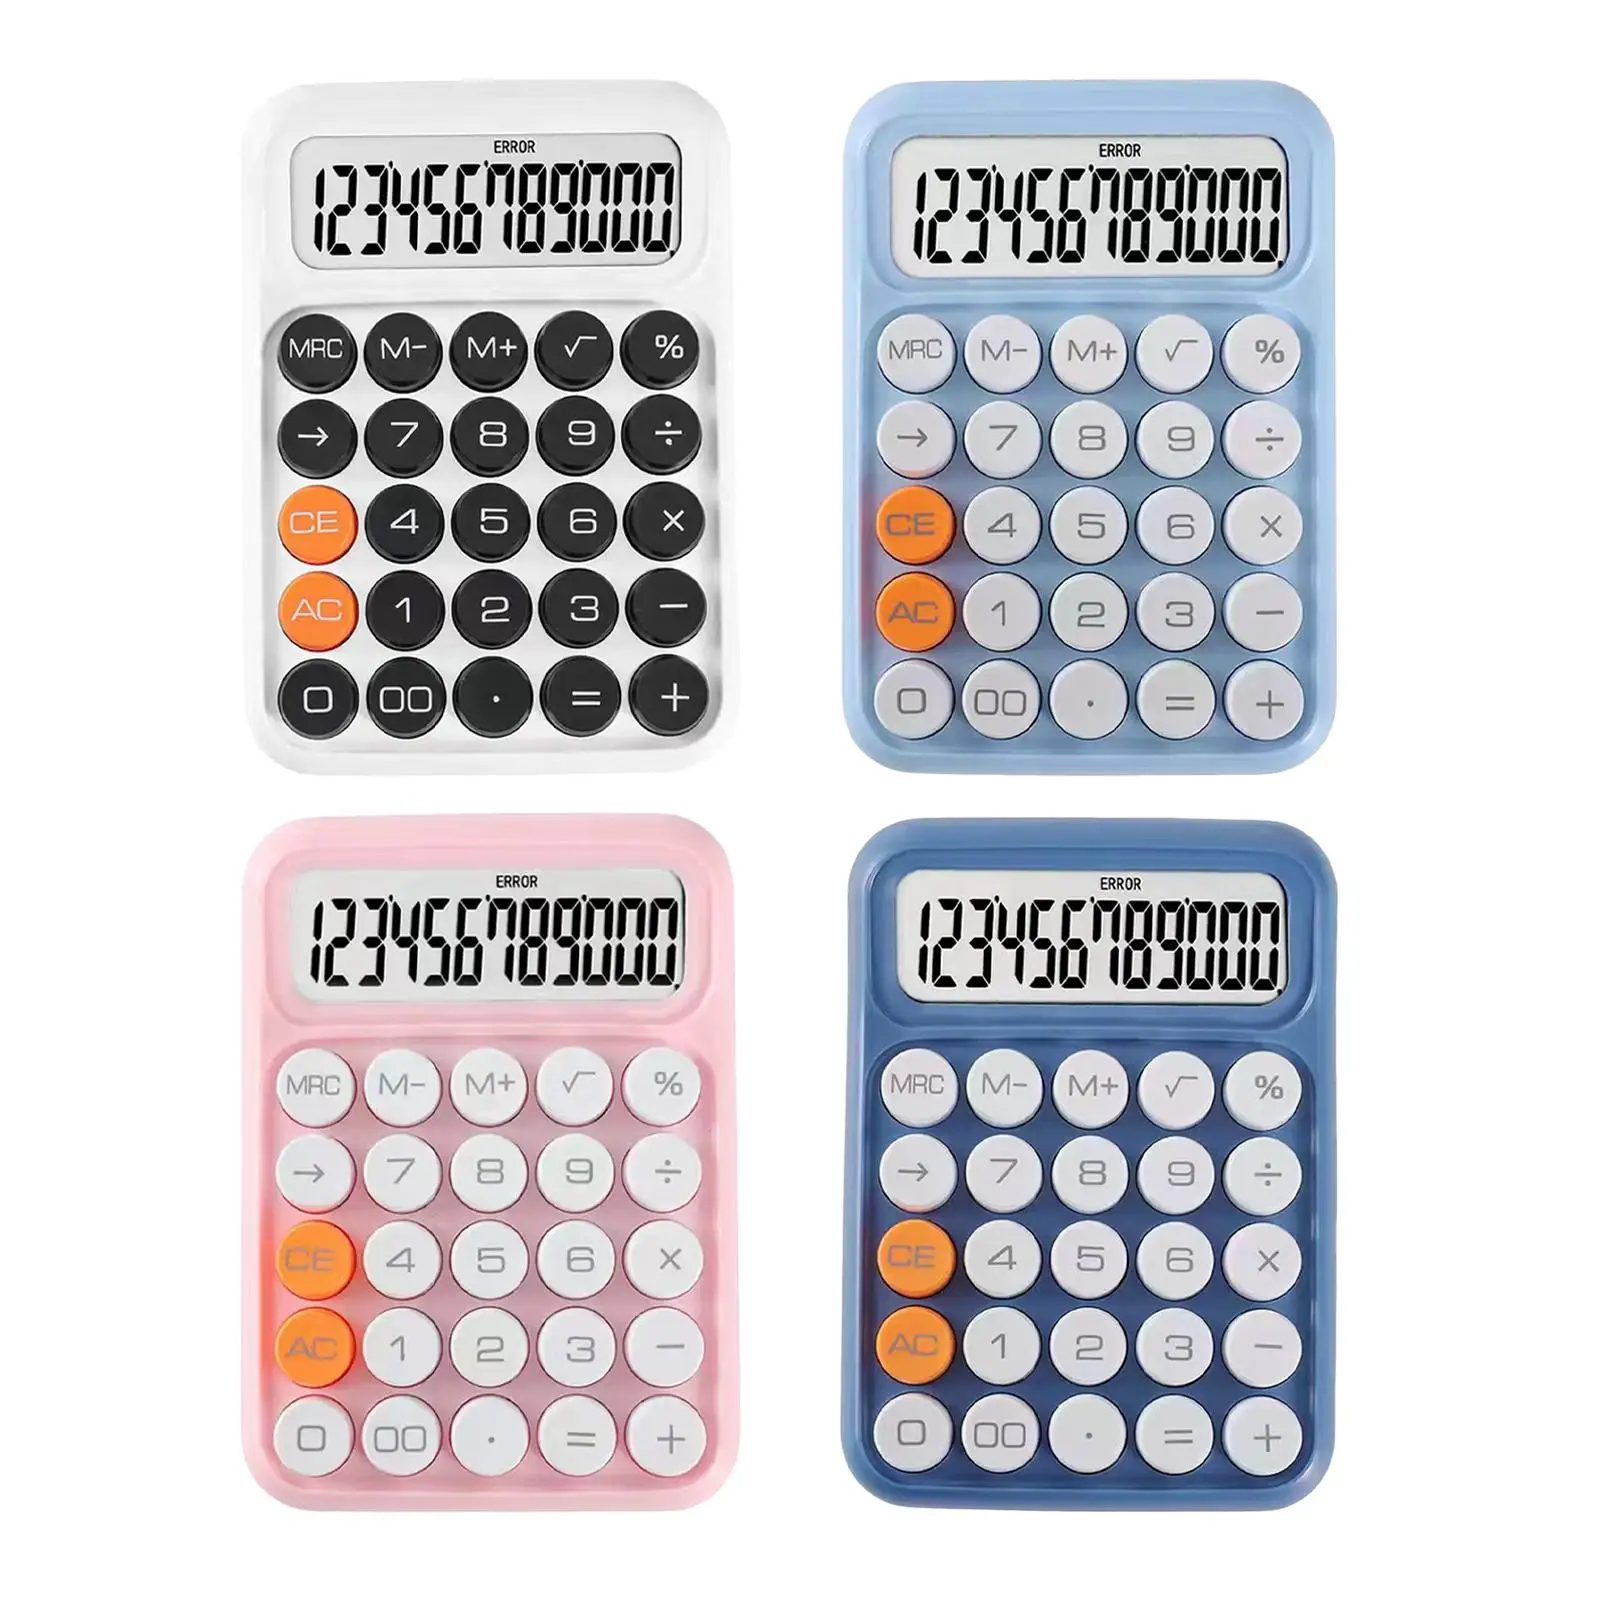 12 Digit Desktop Calculator Cute Pocket Basic Calculator Standard Function Desktop Calculators for Home Office Shop Business Use